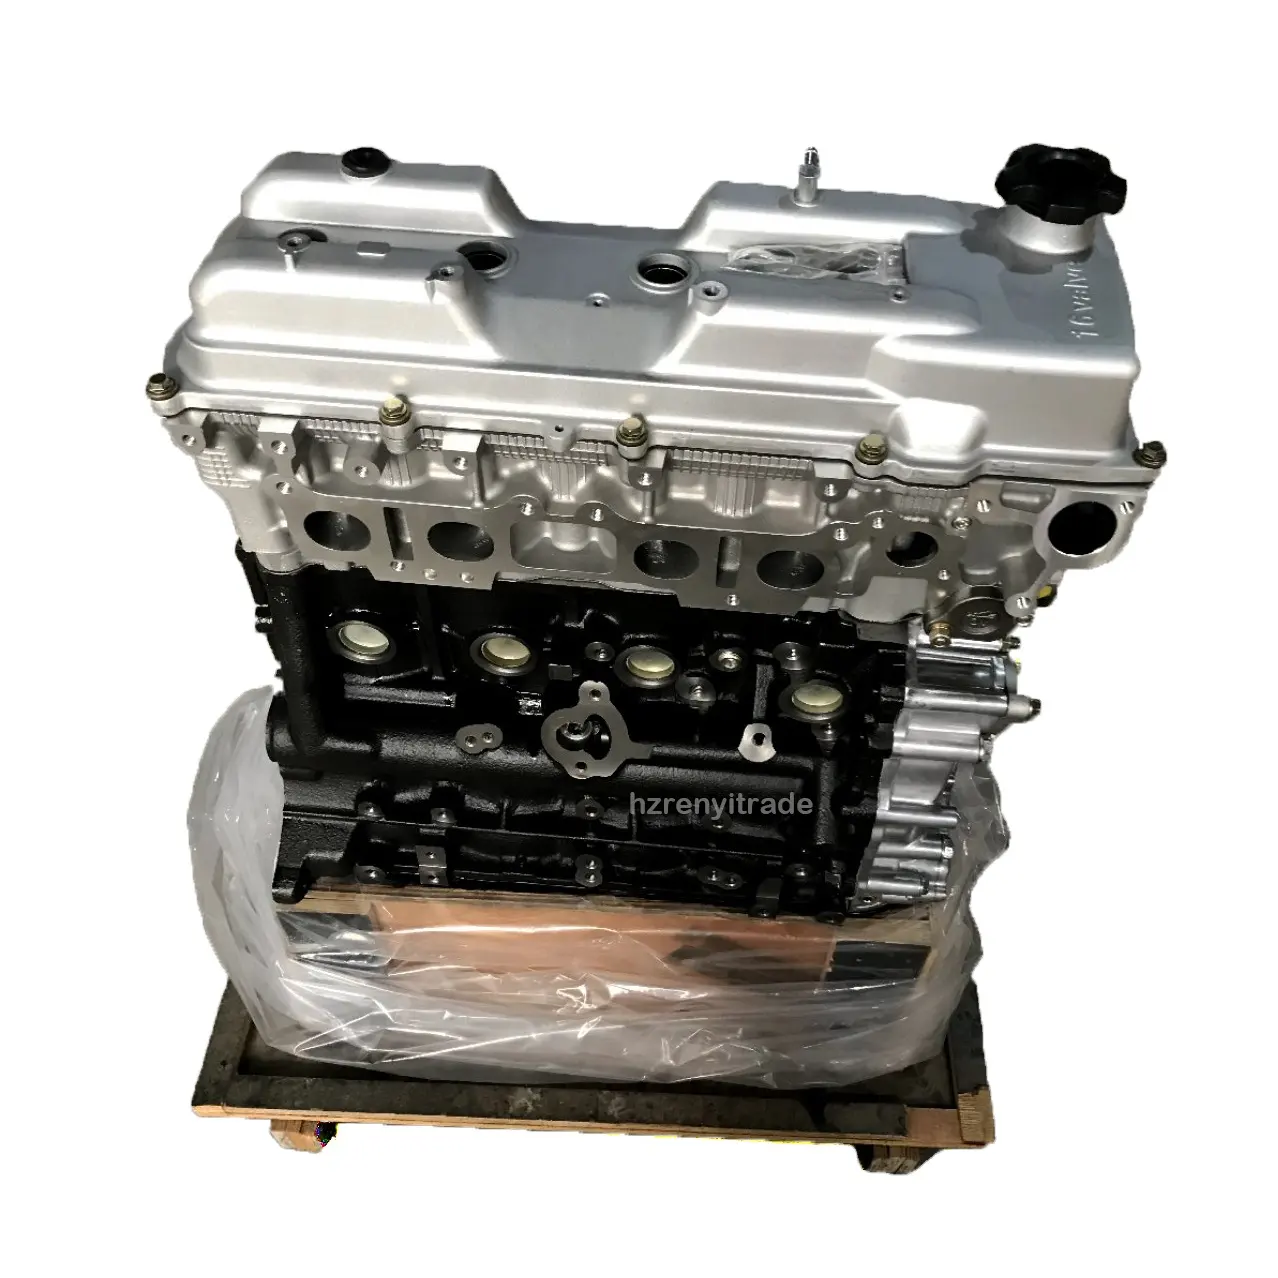 Motor hiace hilux 3rz 3rz-fe, motor de bloco longo 2.7l para venda